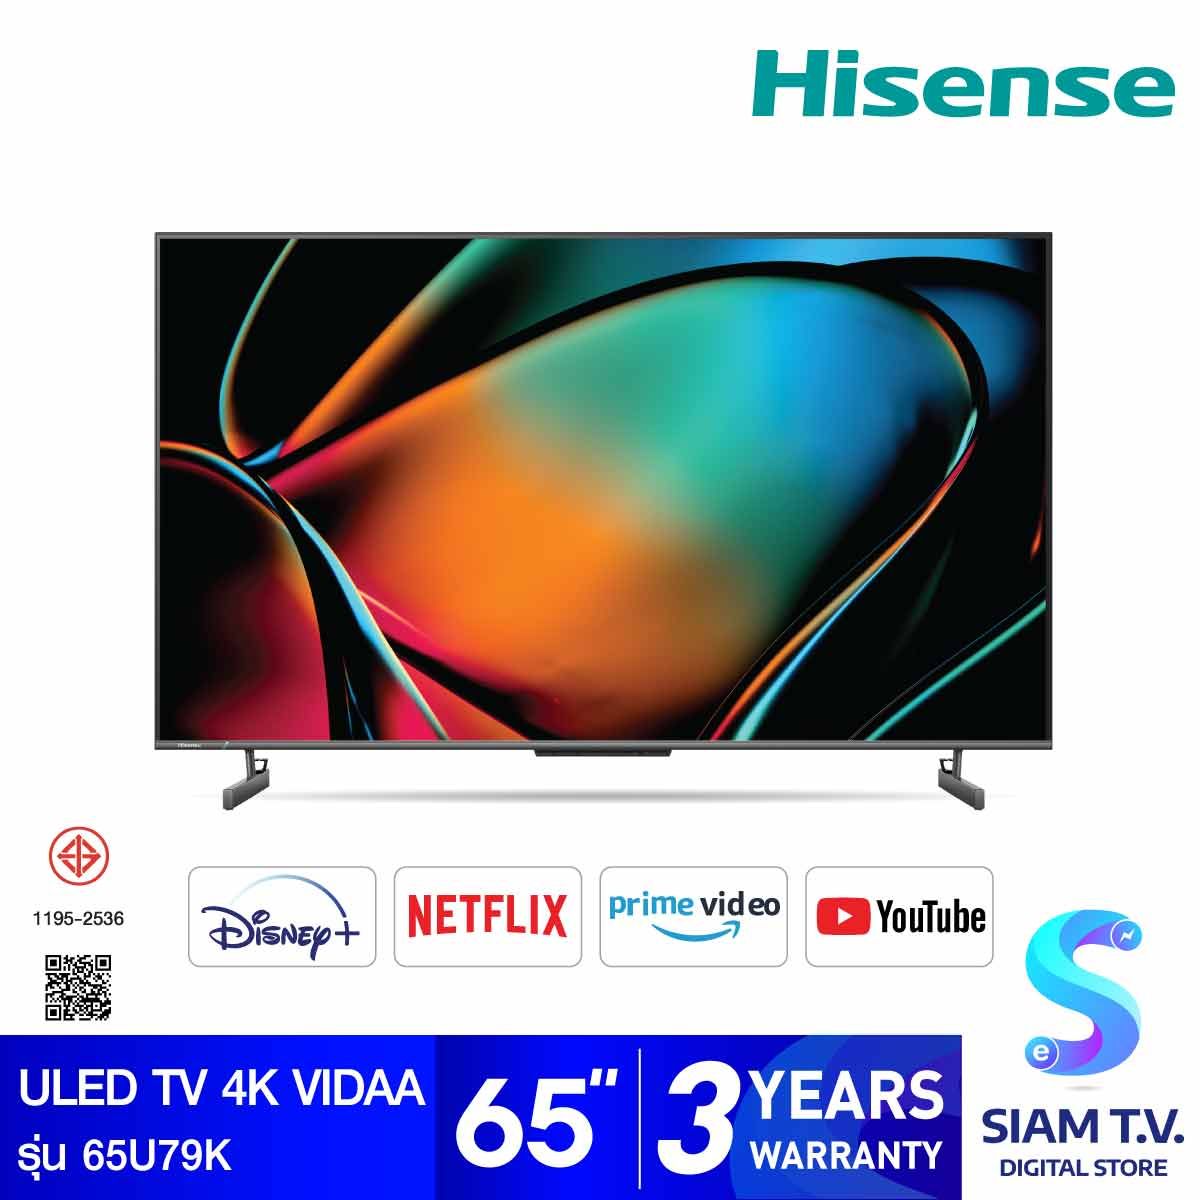 Hisense ULED TV 4K VIDAA 144 Hz รุ่น 65U79K สมาร์ททีวี 4K ขนาด 65 นิ้ว